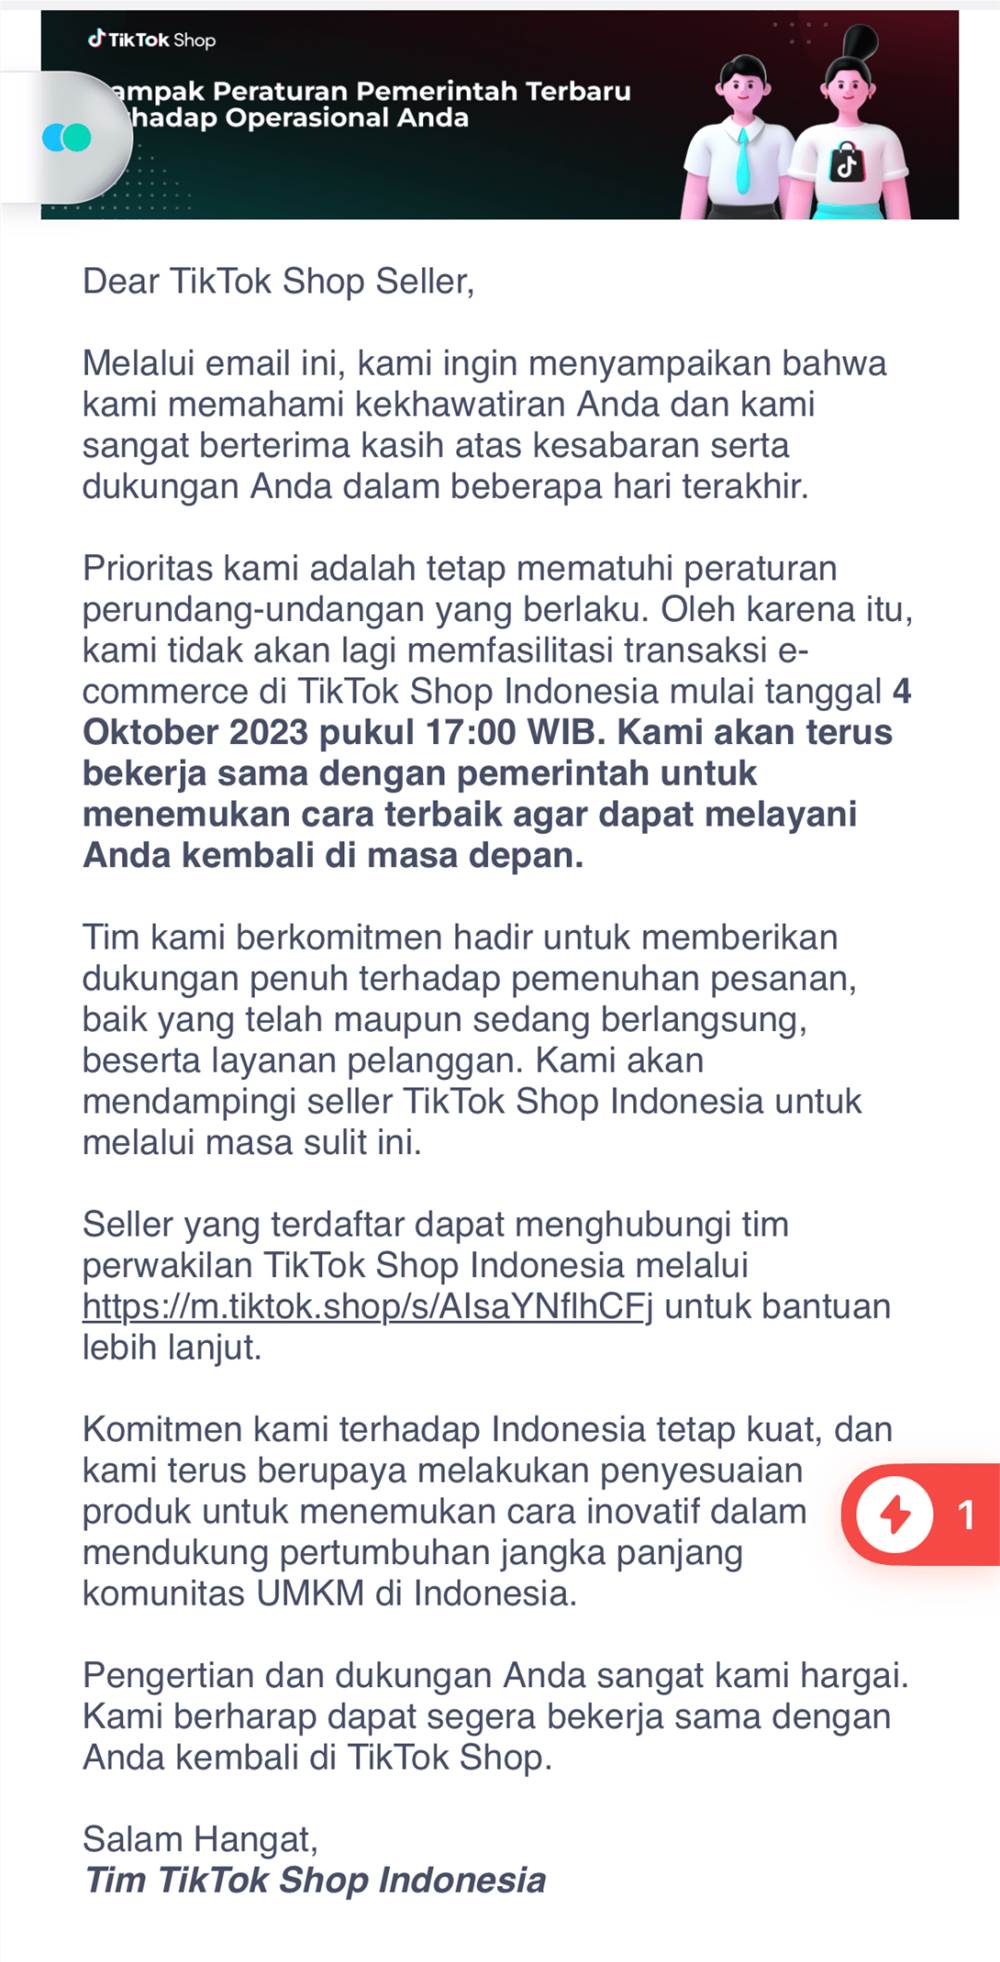 TikTok Shop今起在印尼正式关闭